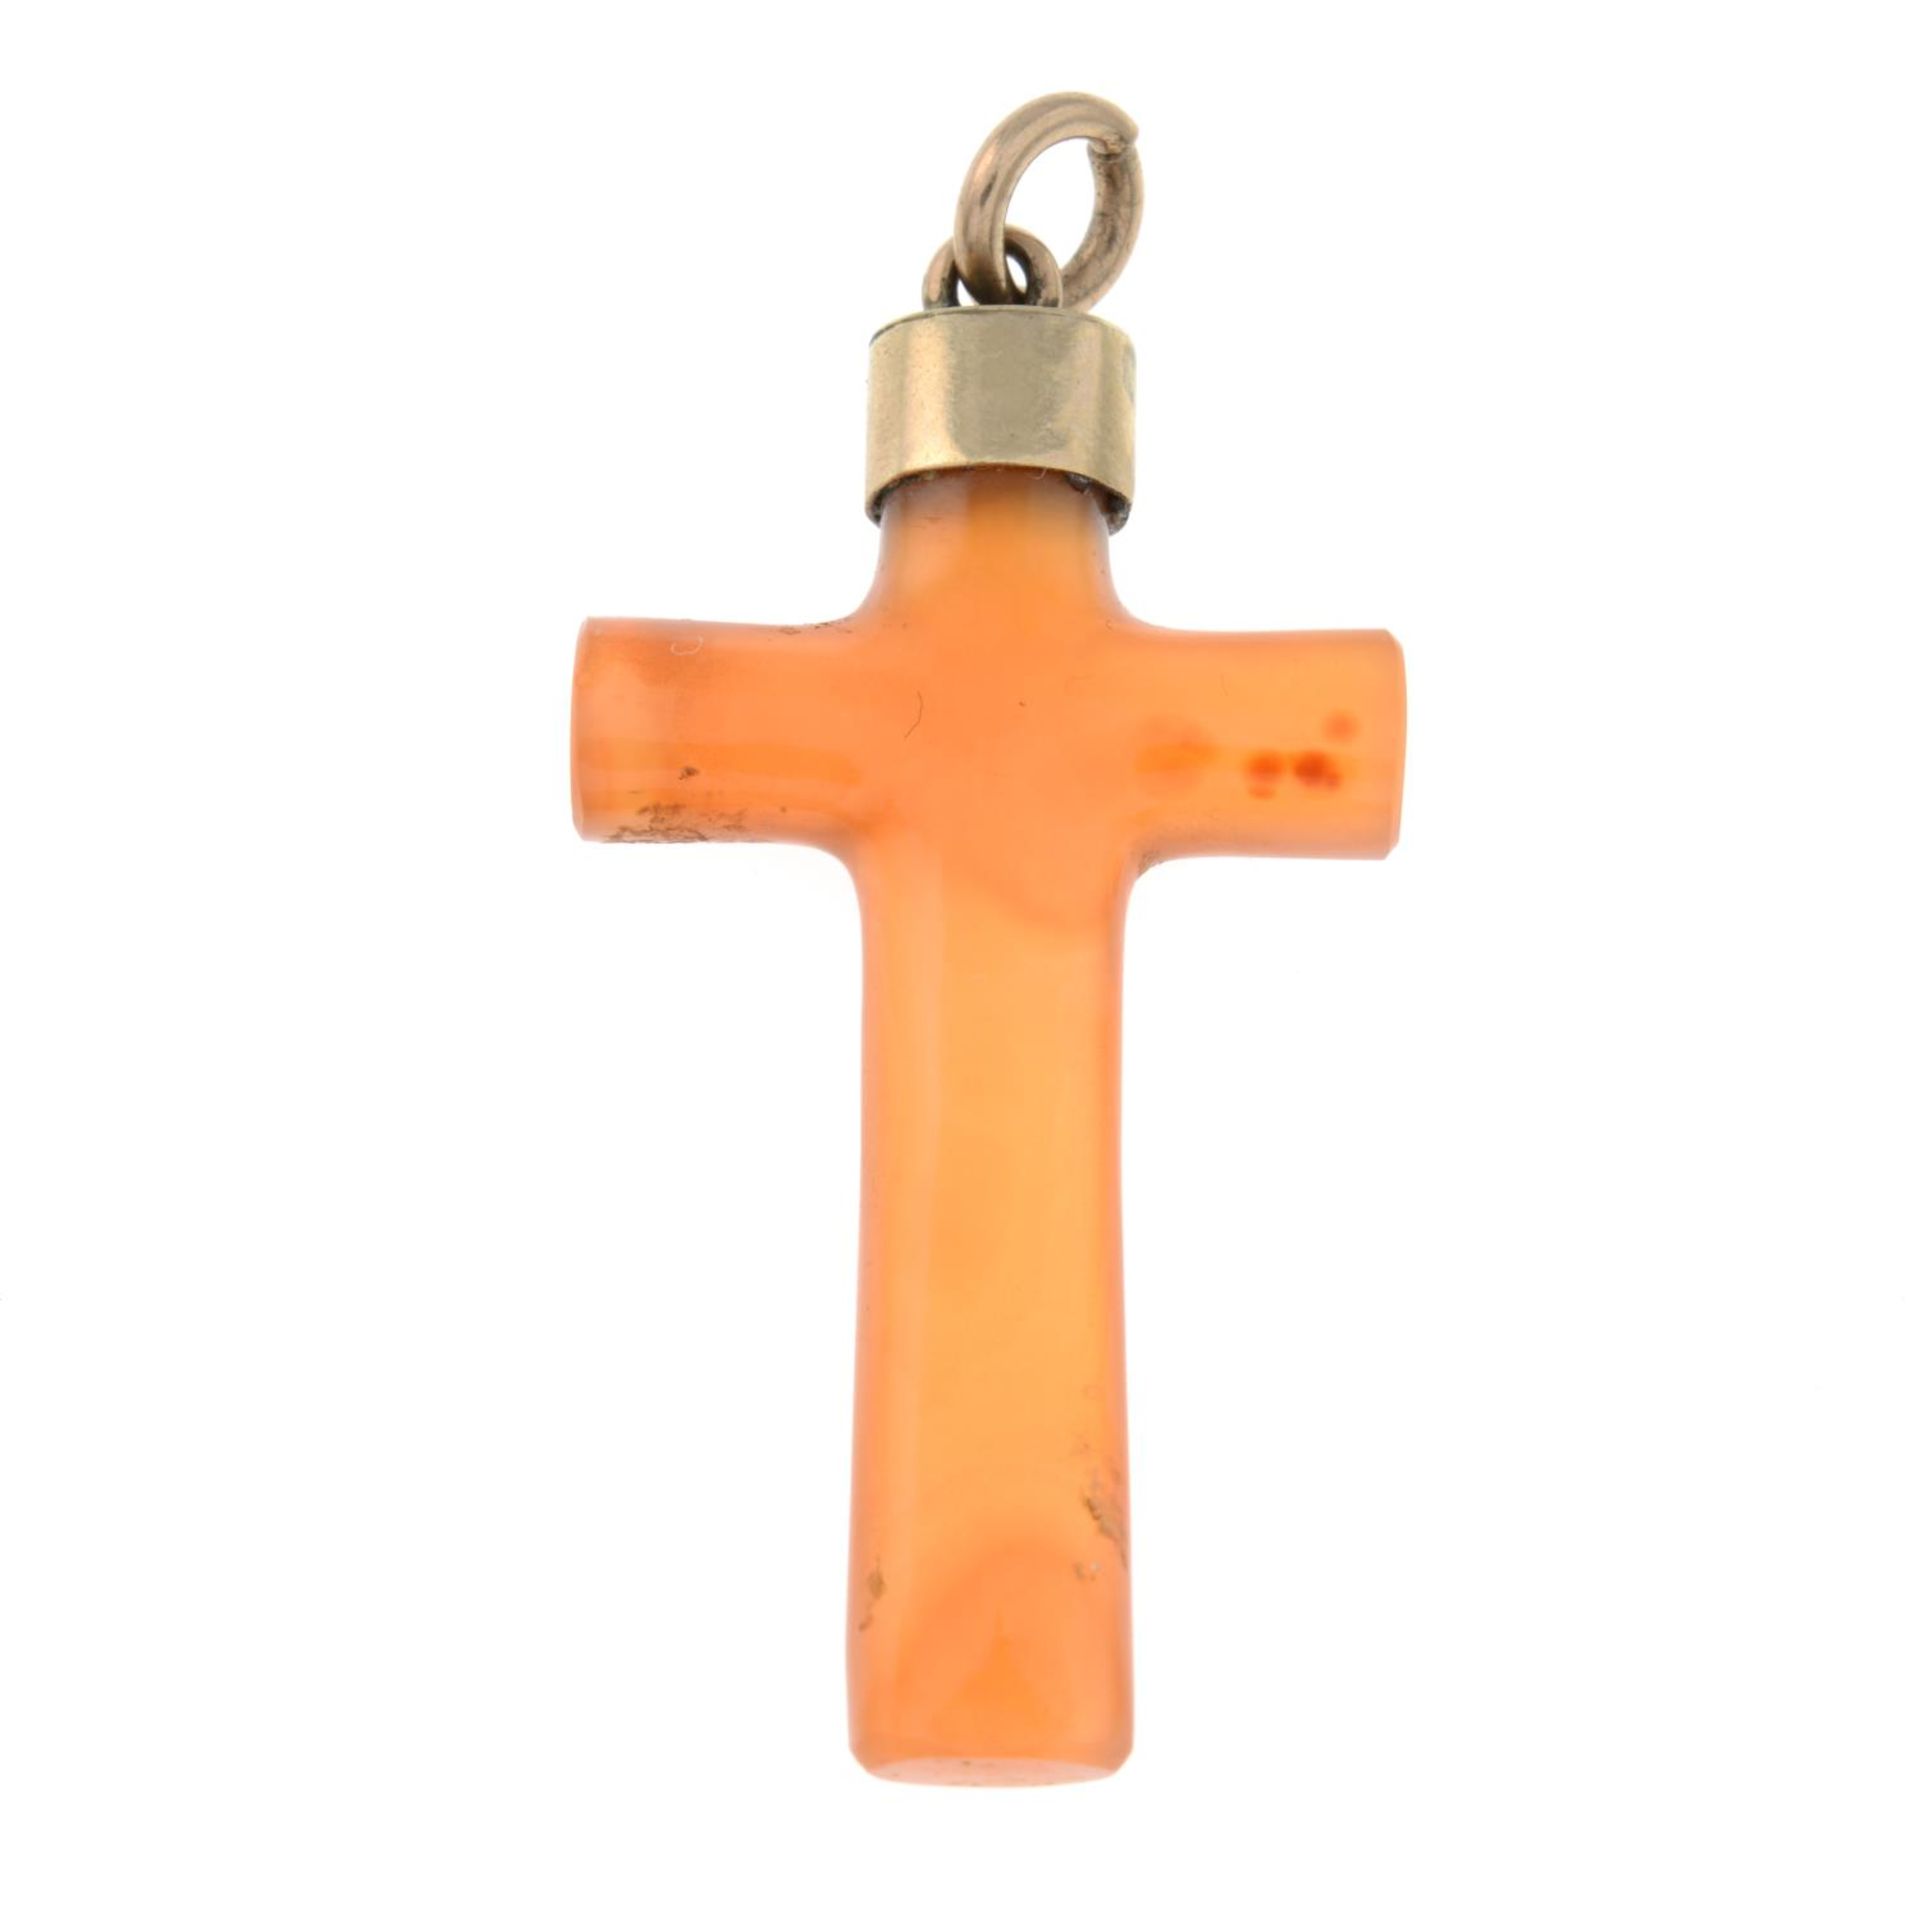 An agate cross pendant.Length 4.6cms. - Image 2 of 2